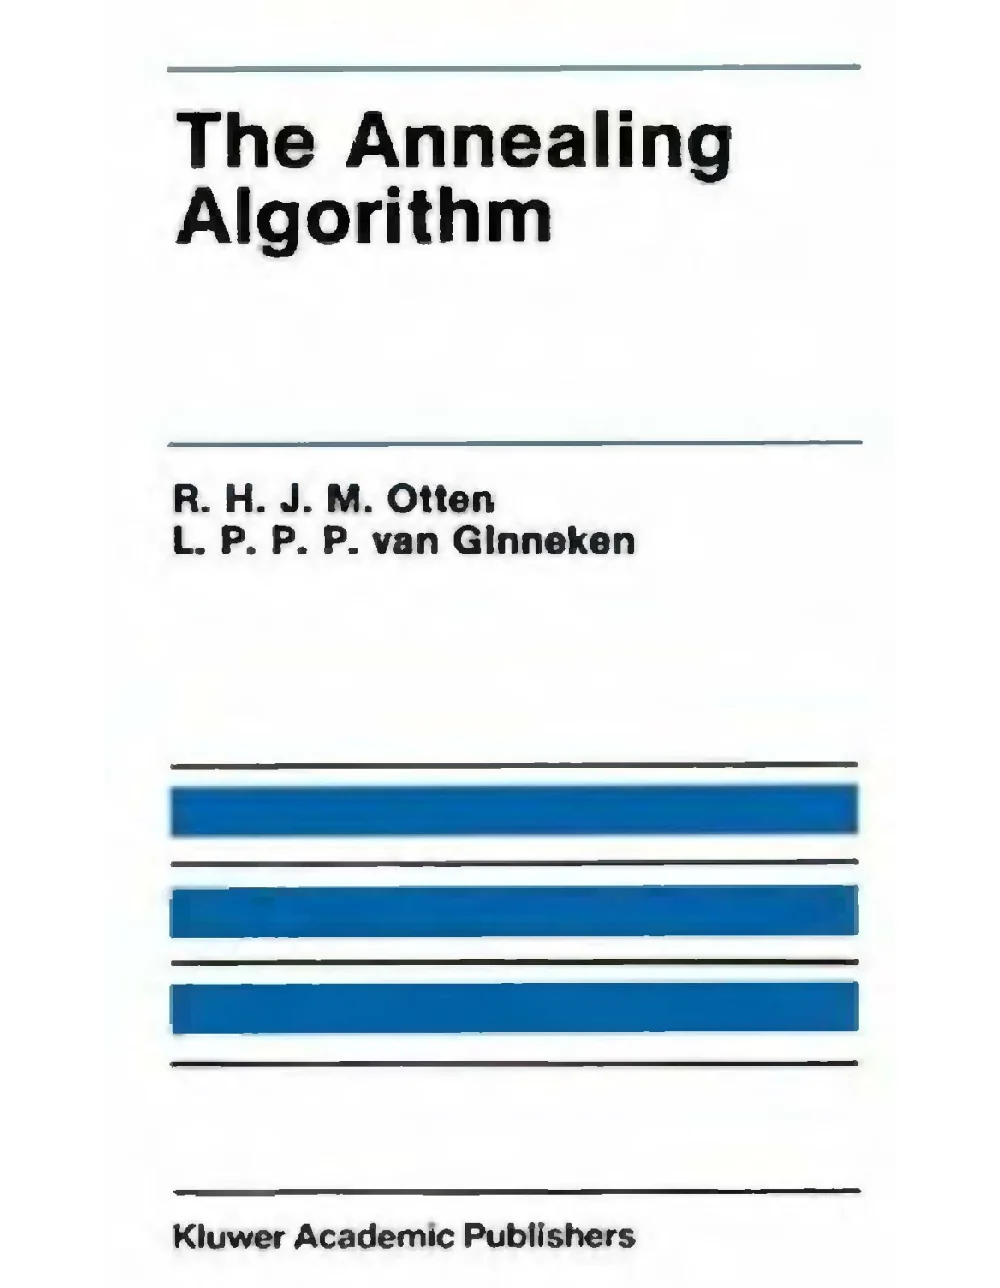 The Annealing Algorithm